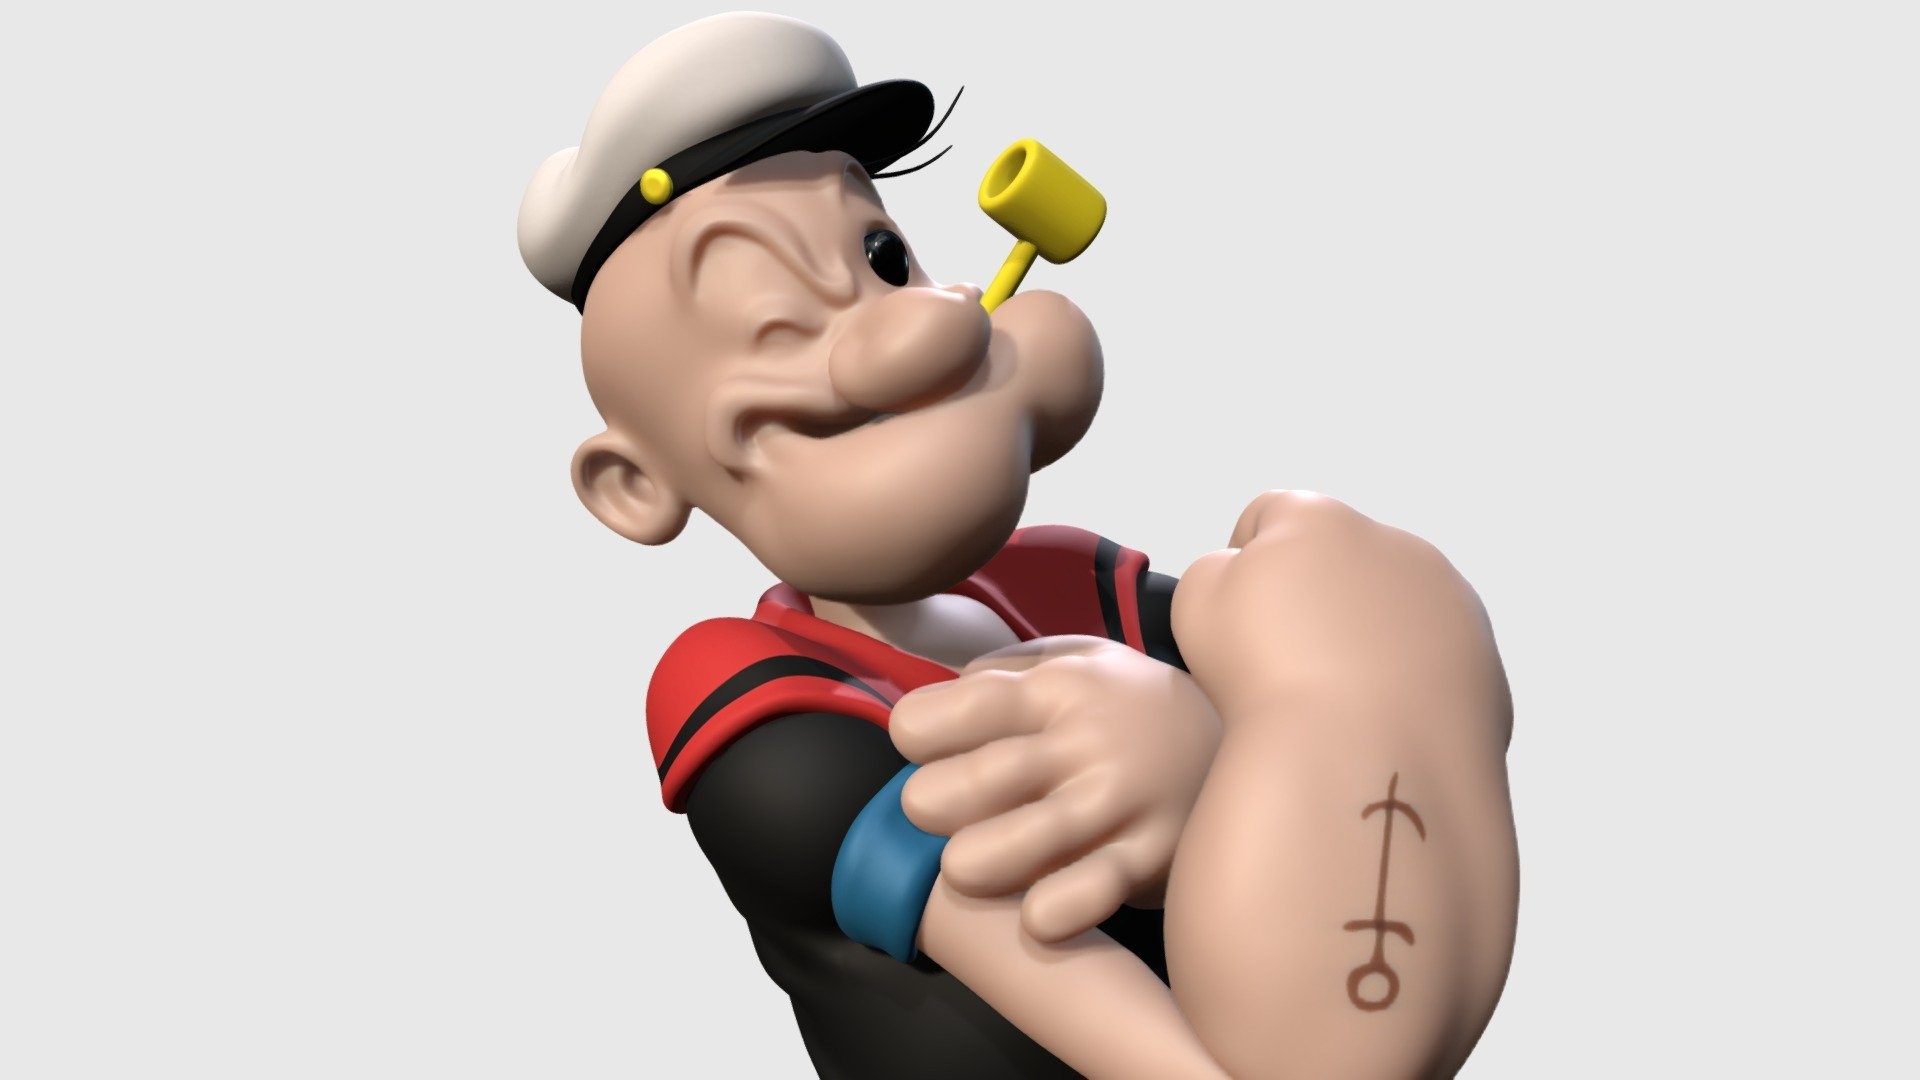 Popeye the Sailor Animation, Popeye the Sailor Man, Royalty-free, 3D model, 1920x1080 Full HD Desktop